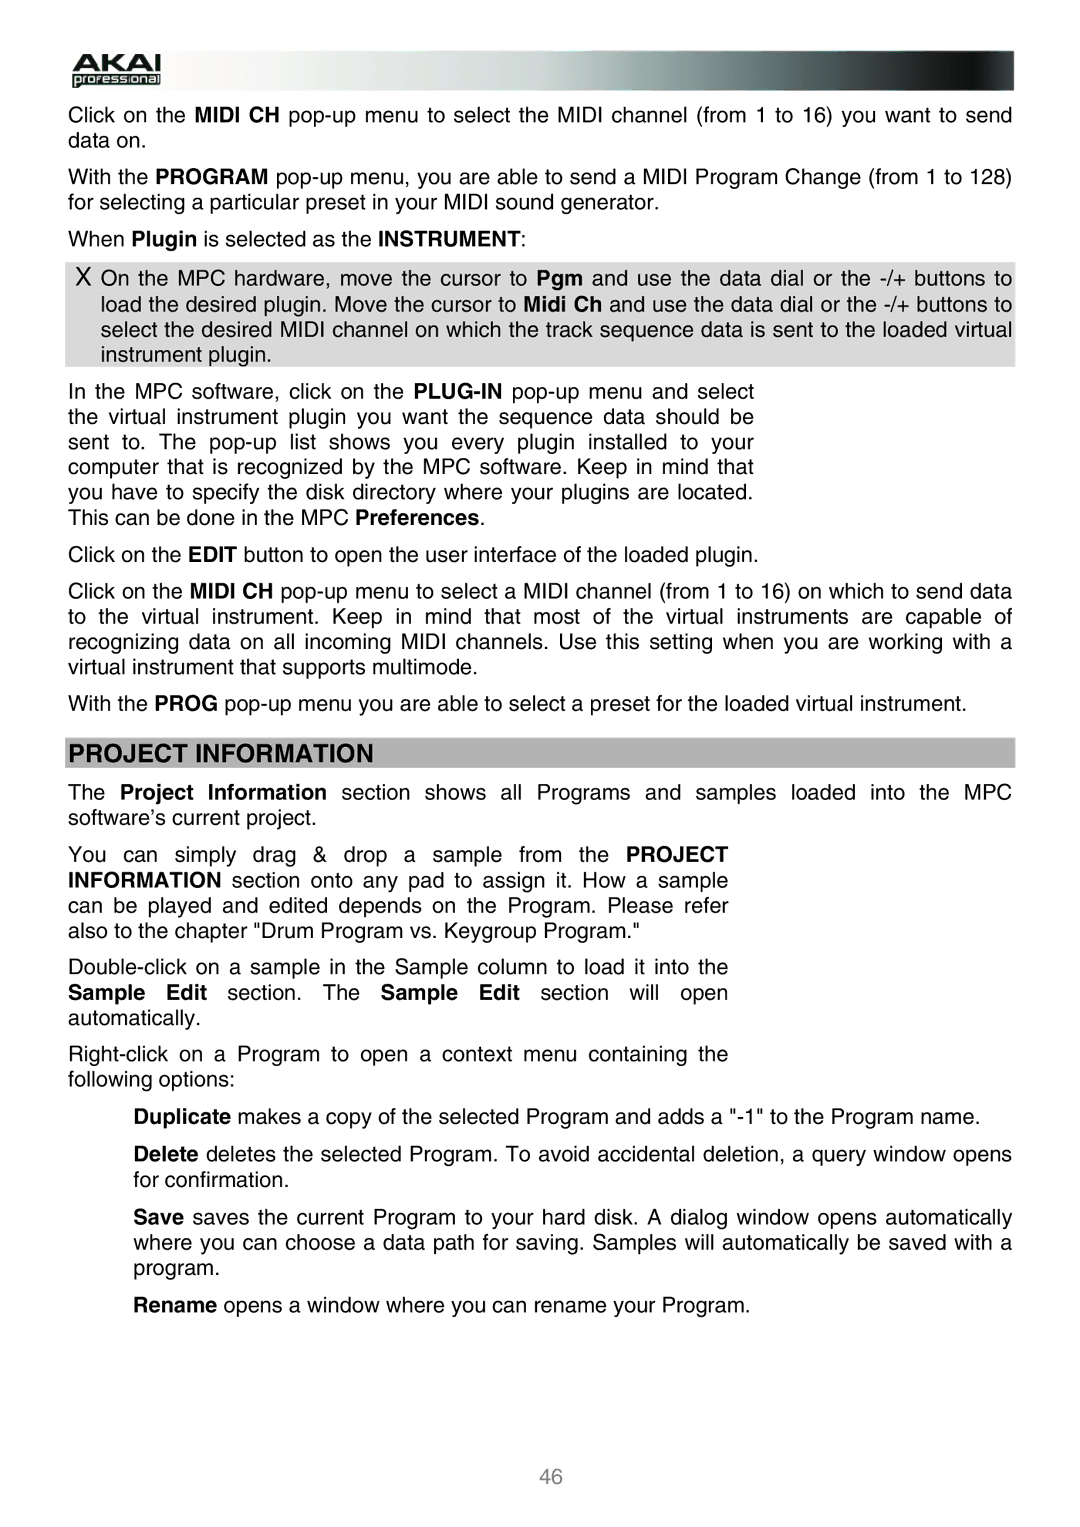 Akai MPC manual Project Information 